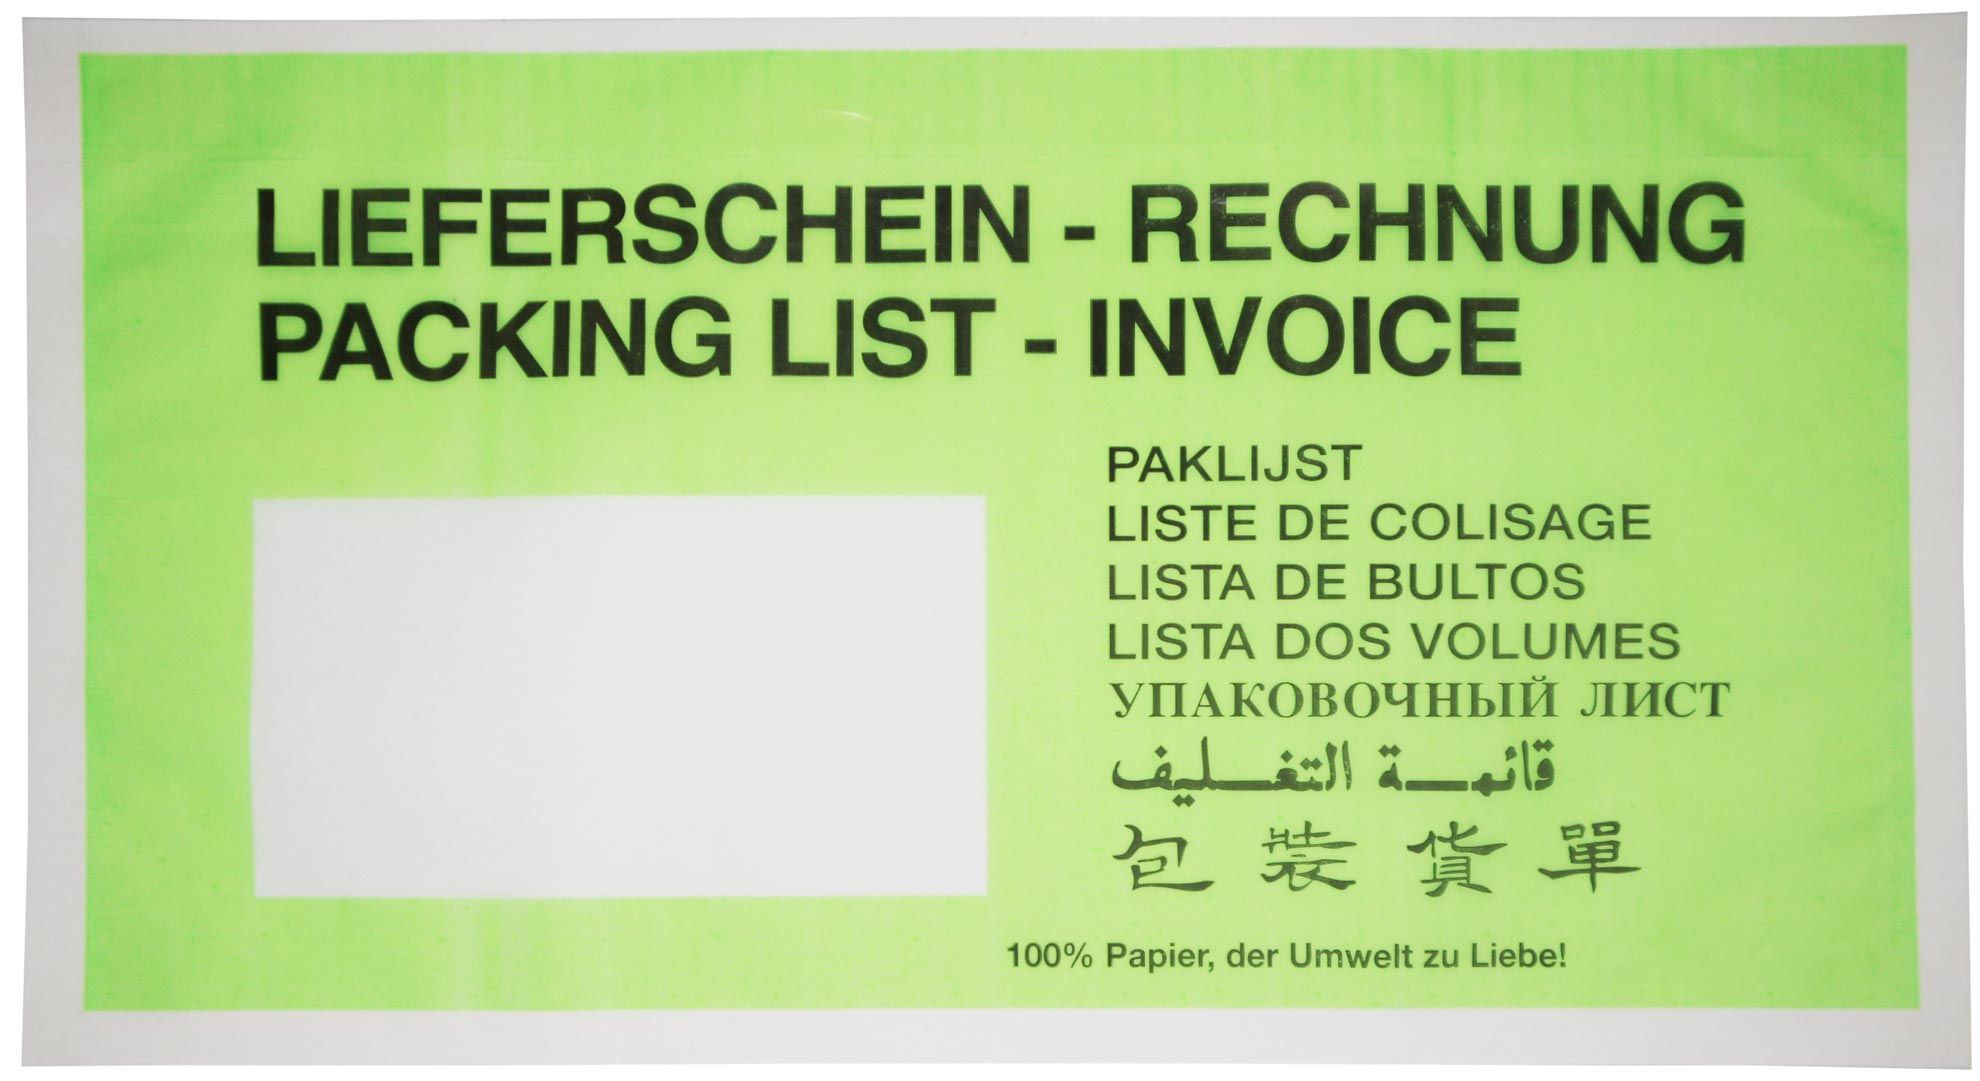 Papier-Dokumentasche DL RG/Lf Rechnung-Liefers Fenster grün 